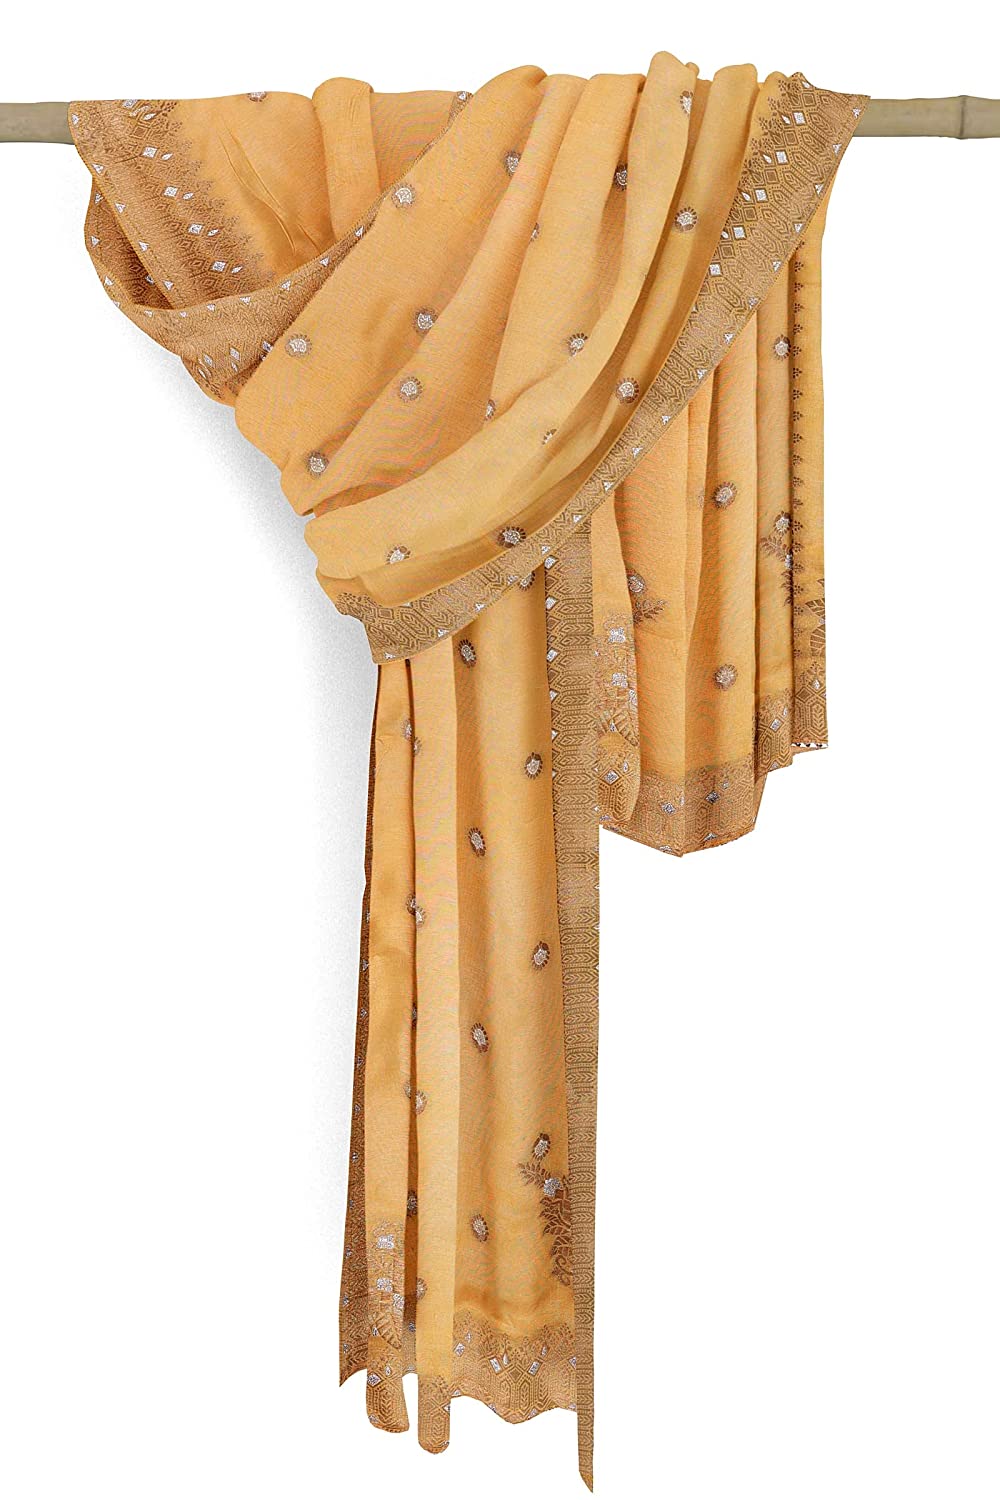 VOGZY.COM Designer Silk Dupatta With Plain Weave N Border For Women Free Size, Mustard Yellow Color